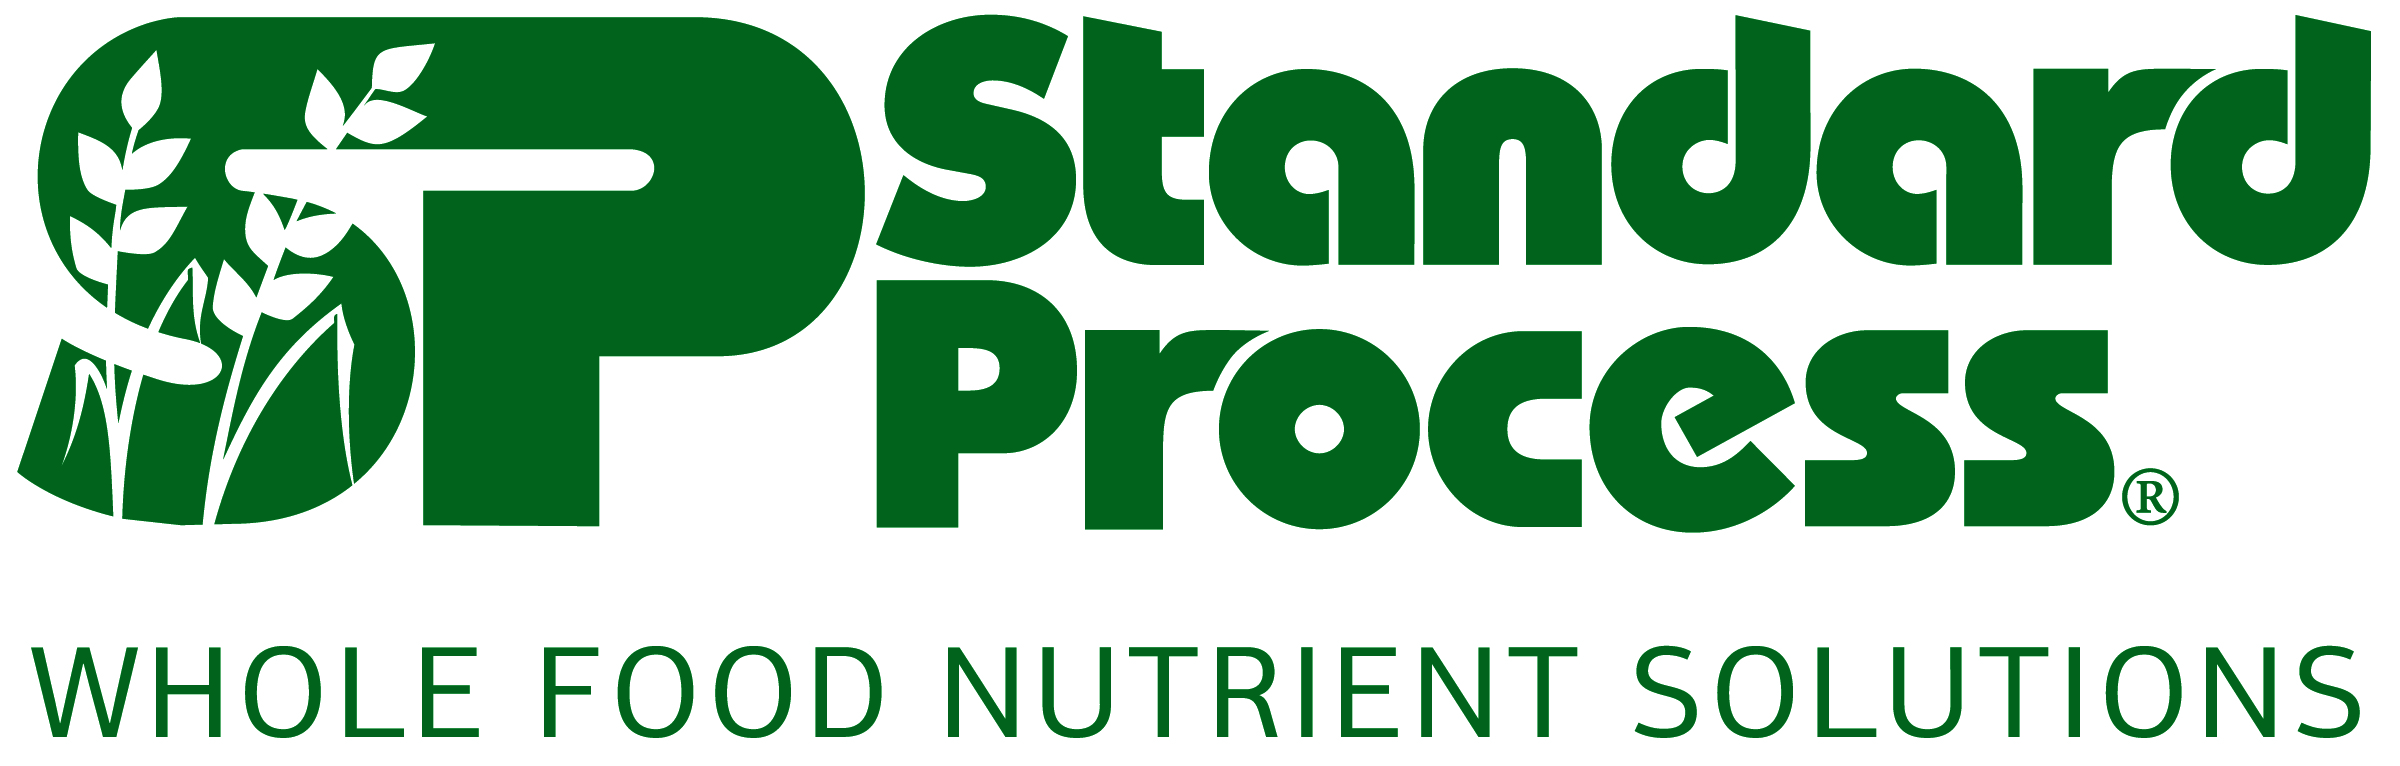 CMYK_StandardProcess Nutrient Solution-01.jpg